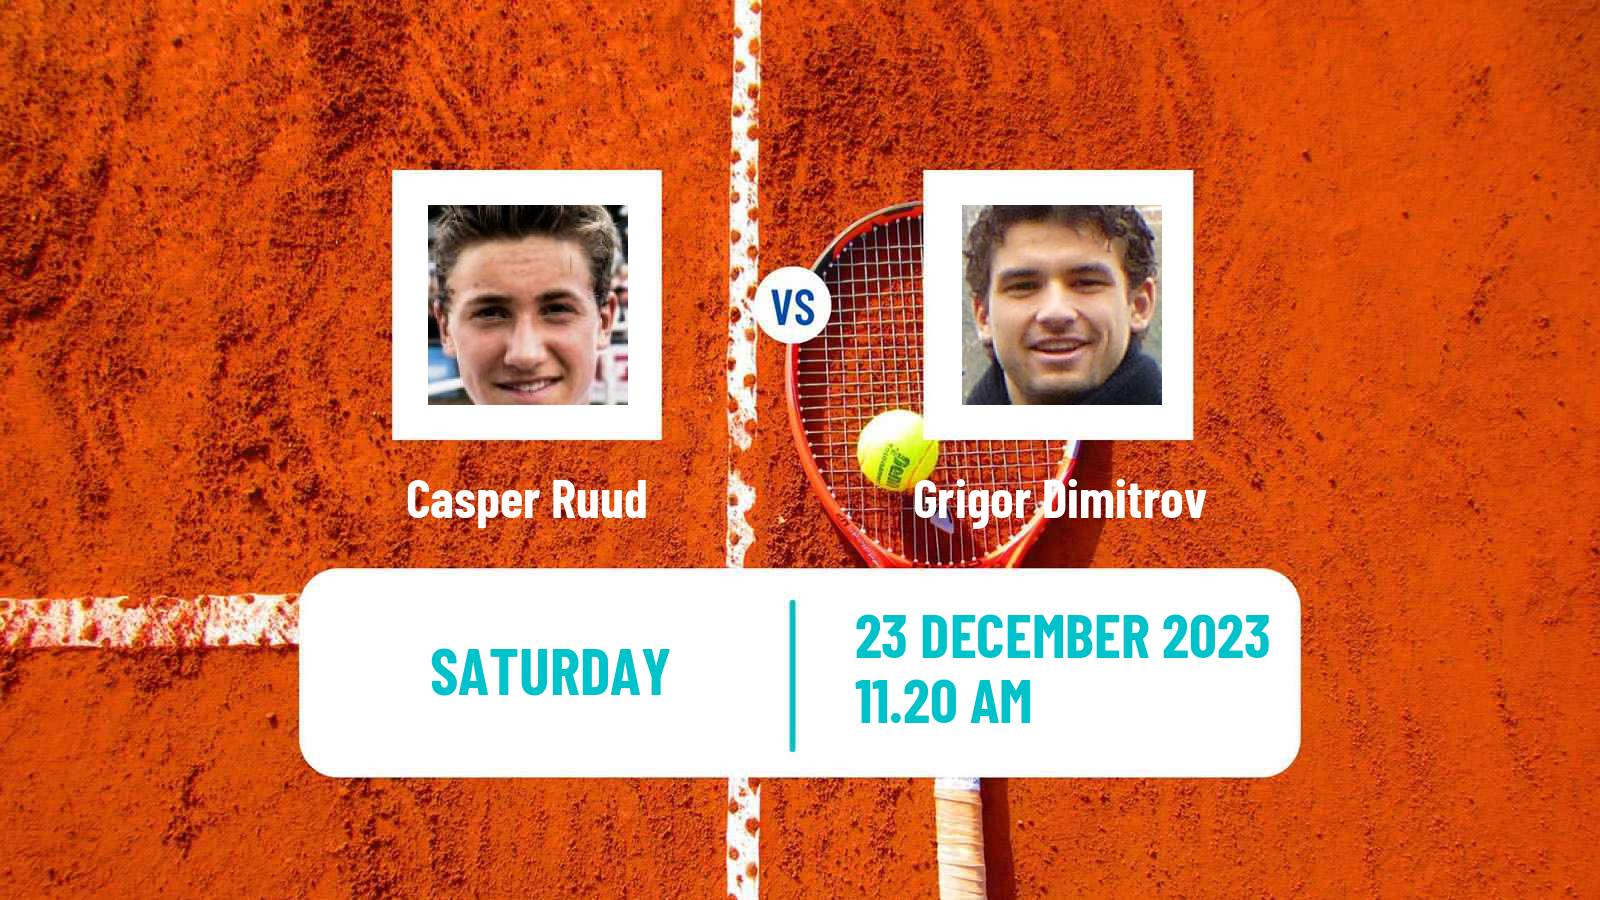 Tennis Exhibition World Tennis League Casper Ruud - Grigor Dimitrov